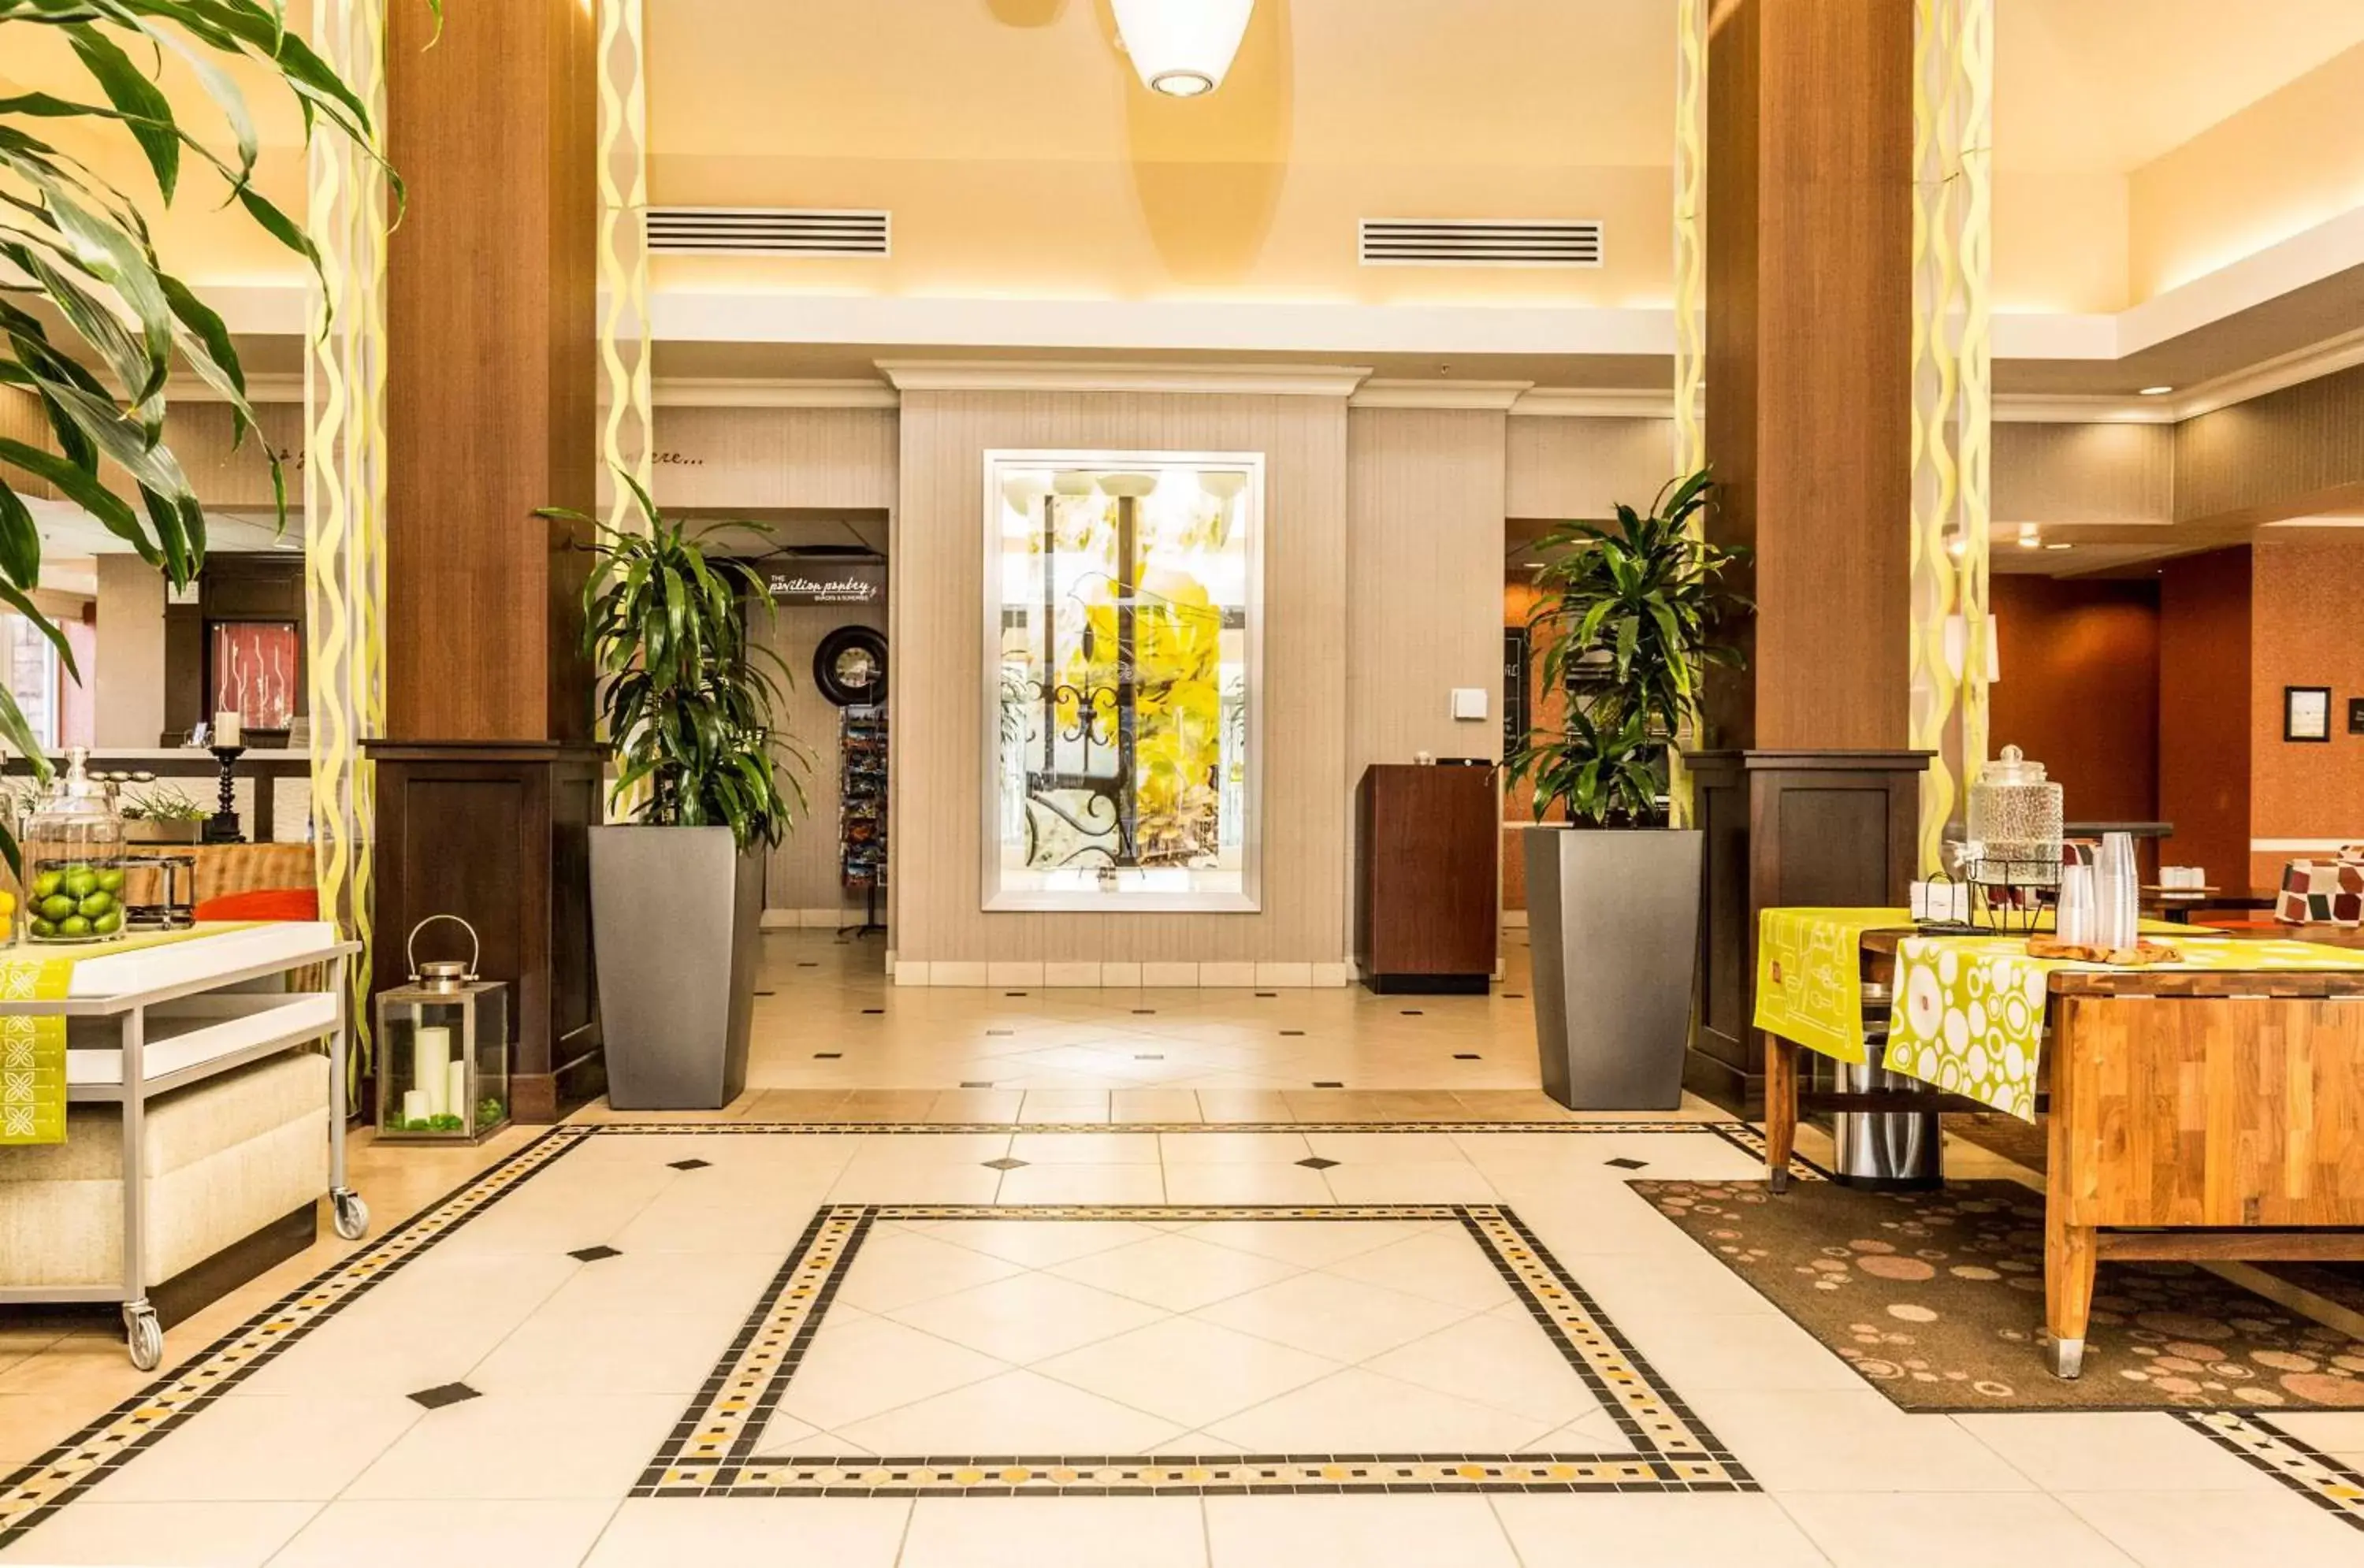 Lobby or reception in Hilton Garden Inn St. George